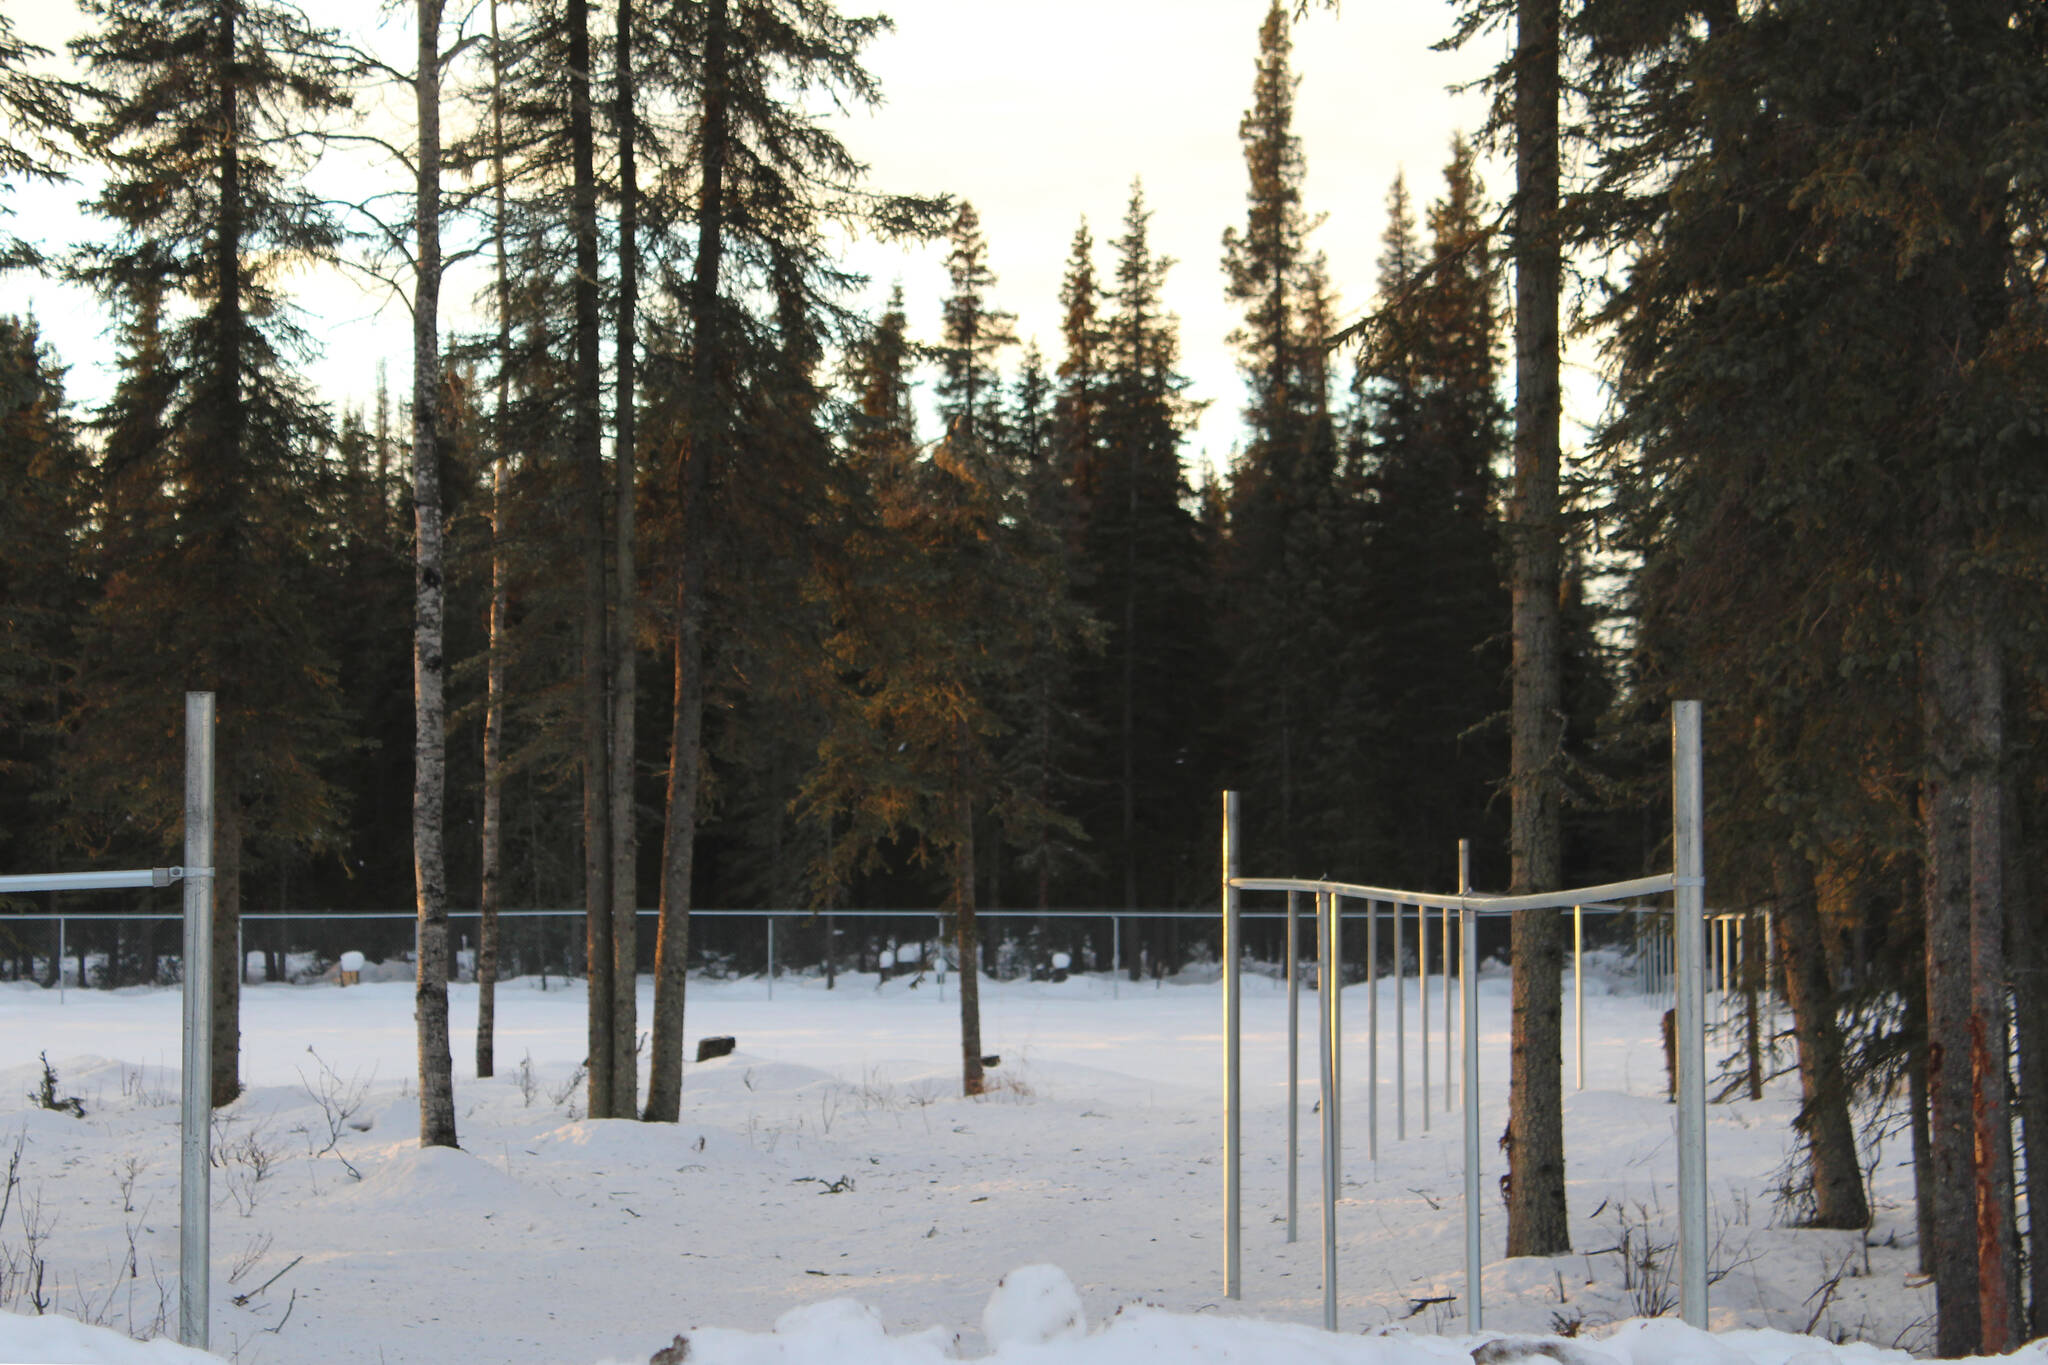 Fencing marks the boundaries of a planned dog park in Kenai near Daubenspeck Park on Monday, Dec. 27, 2021, in Kenai, Alaska. (Ashlyn O’Hara/Peninsula Clarion)